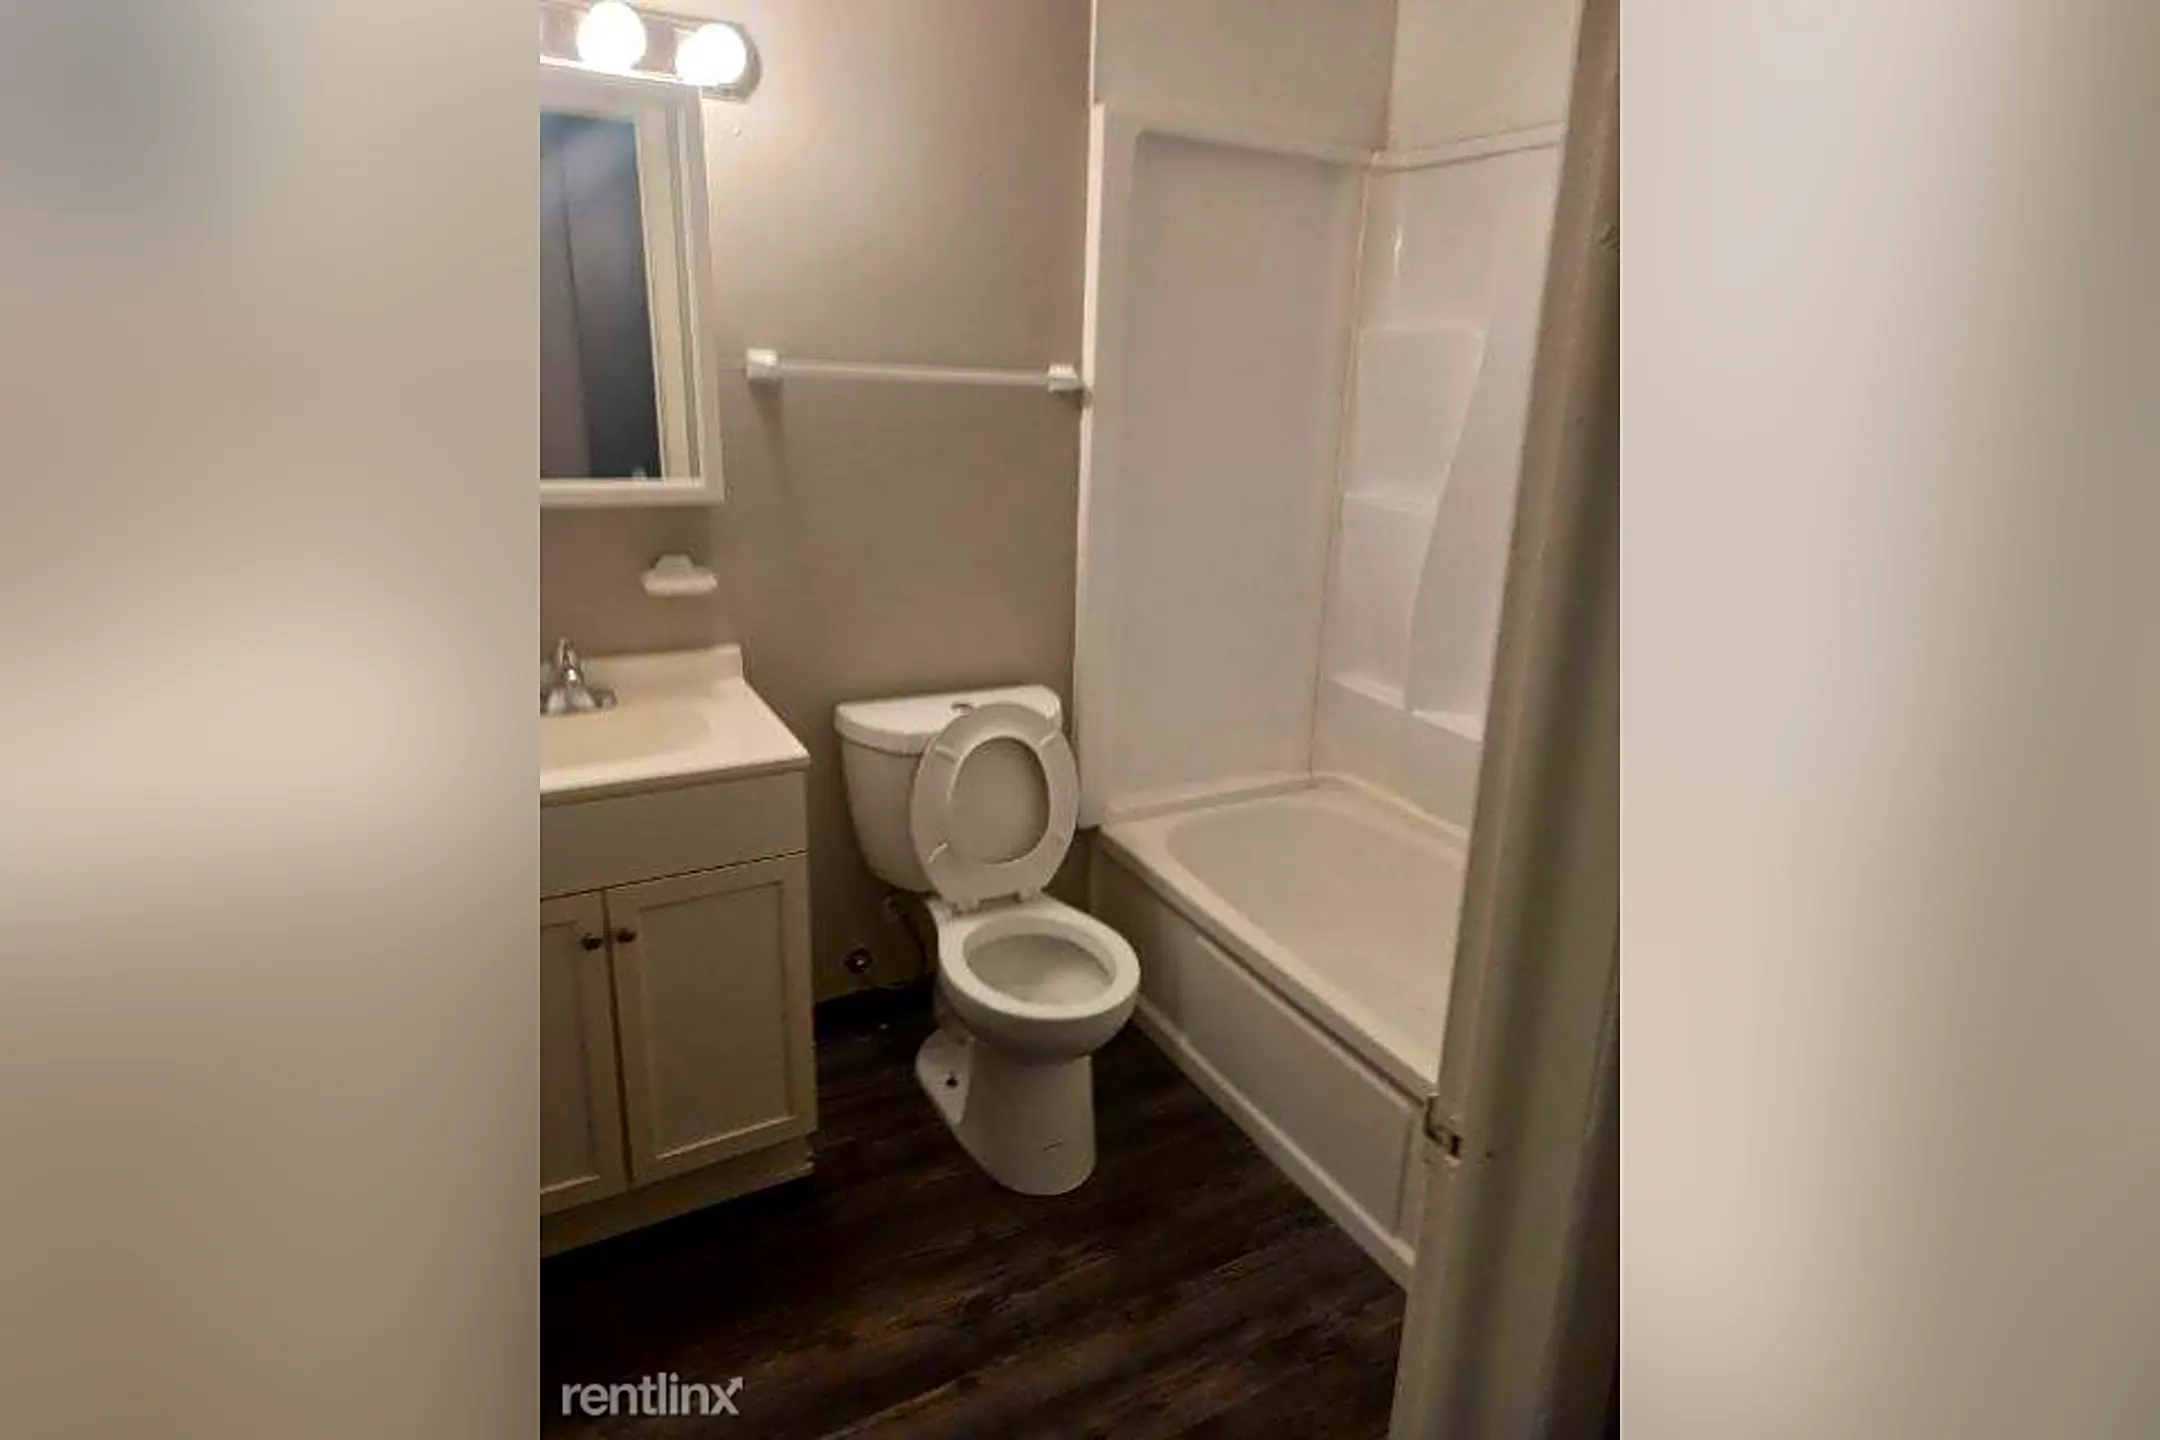 Bathroom - 40 S Linden Rd - Mansfield, OH